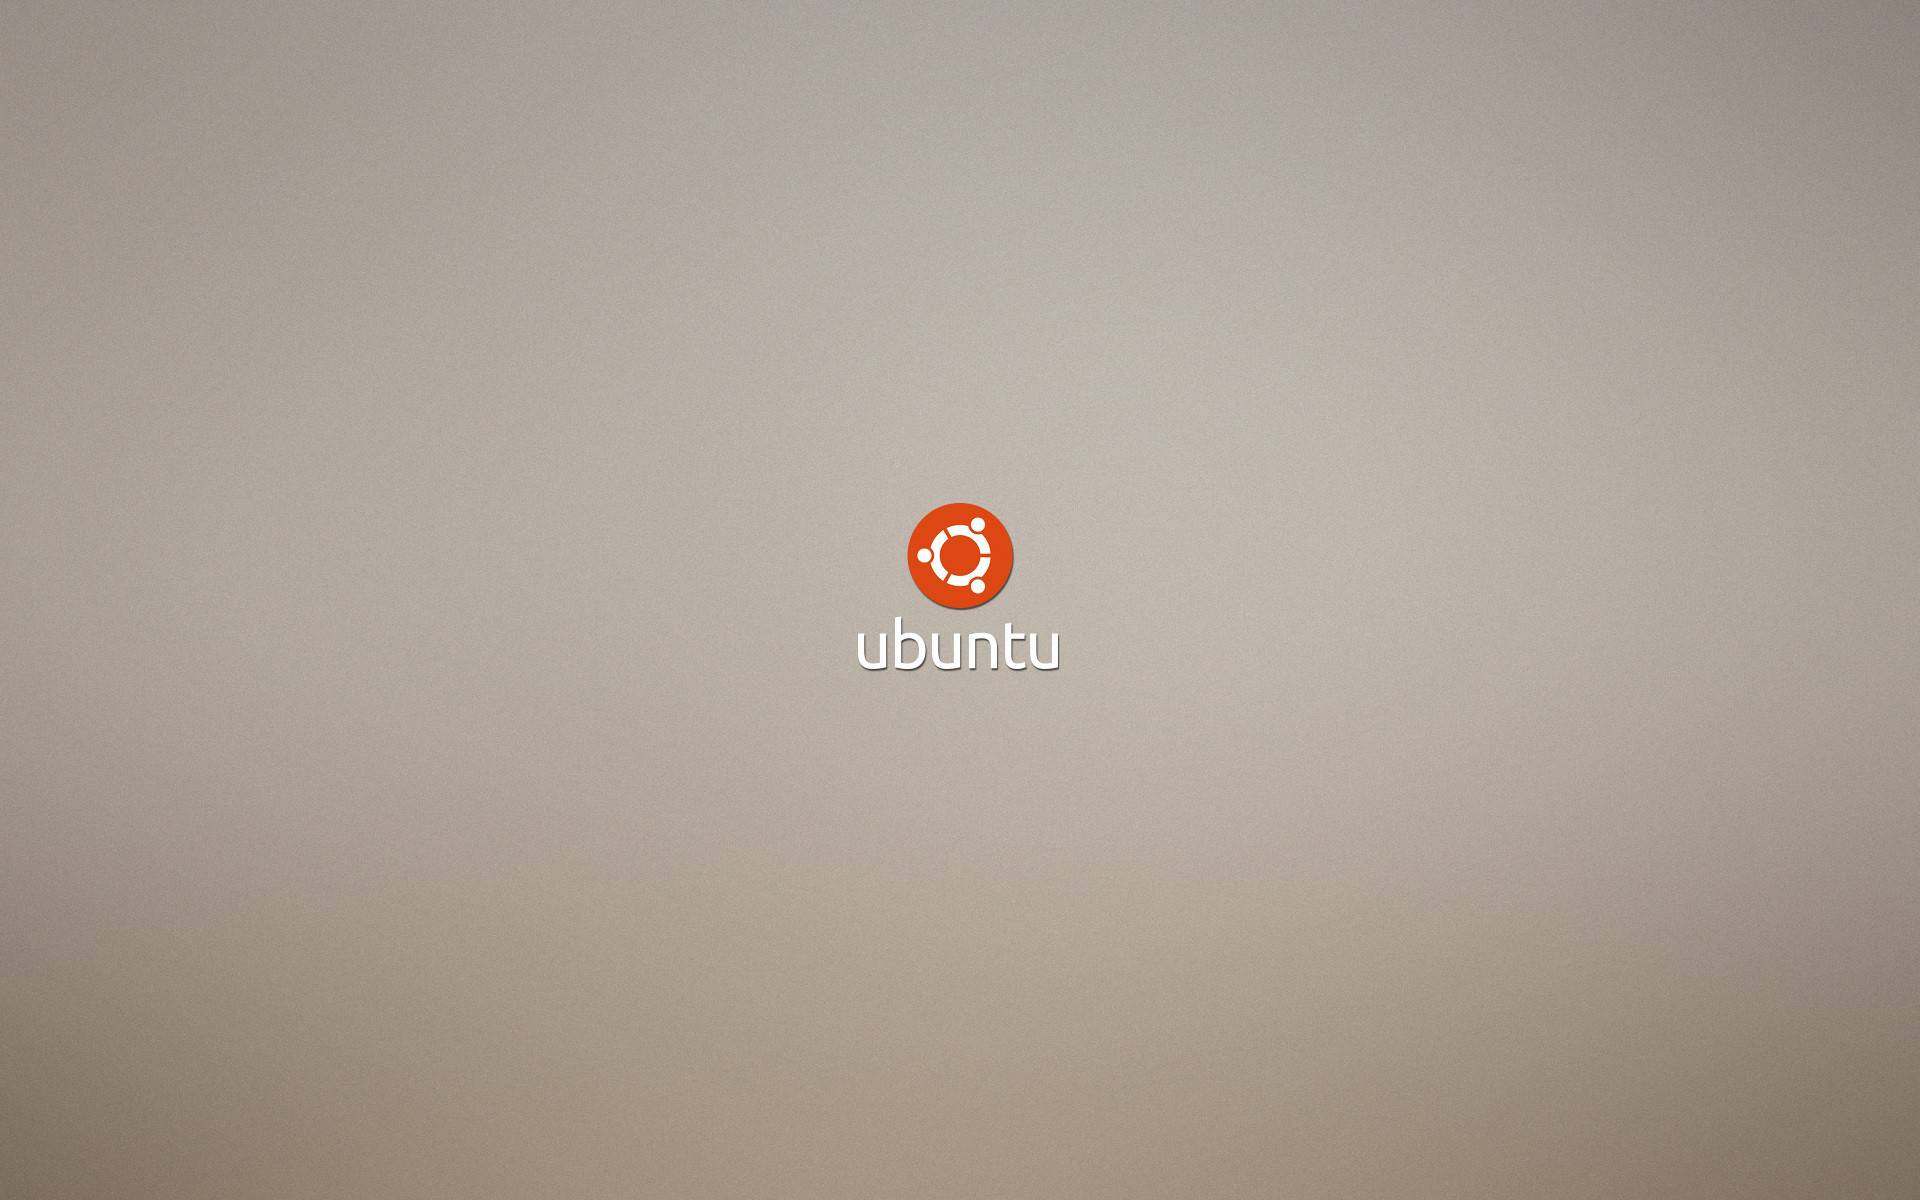 Linux Ubuntu Logo Wallpaper Download Wallpaper